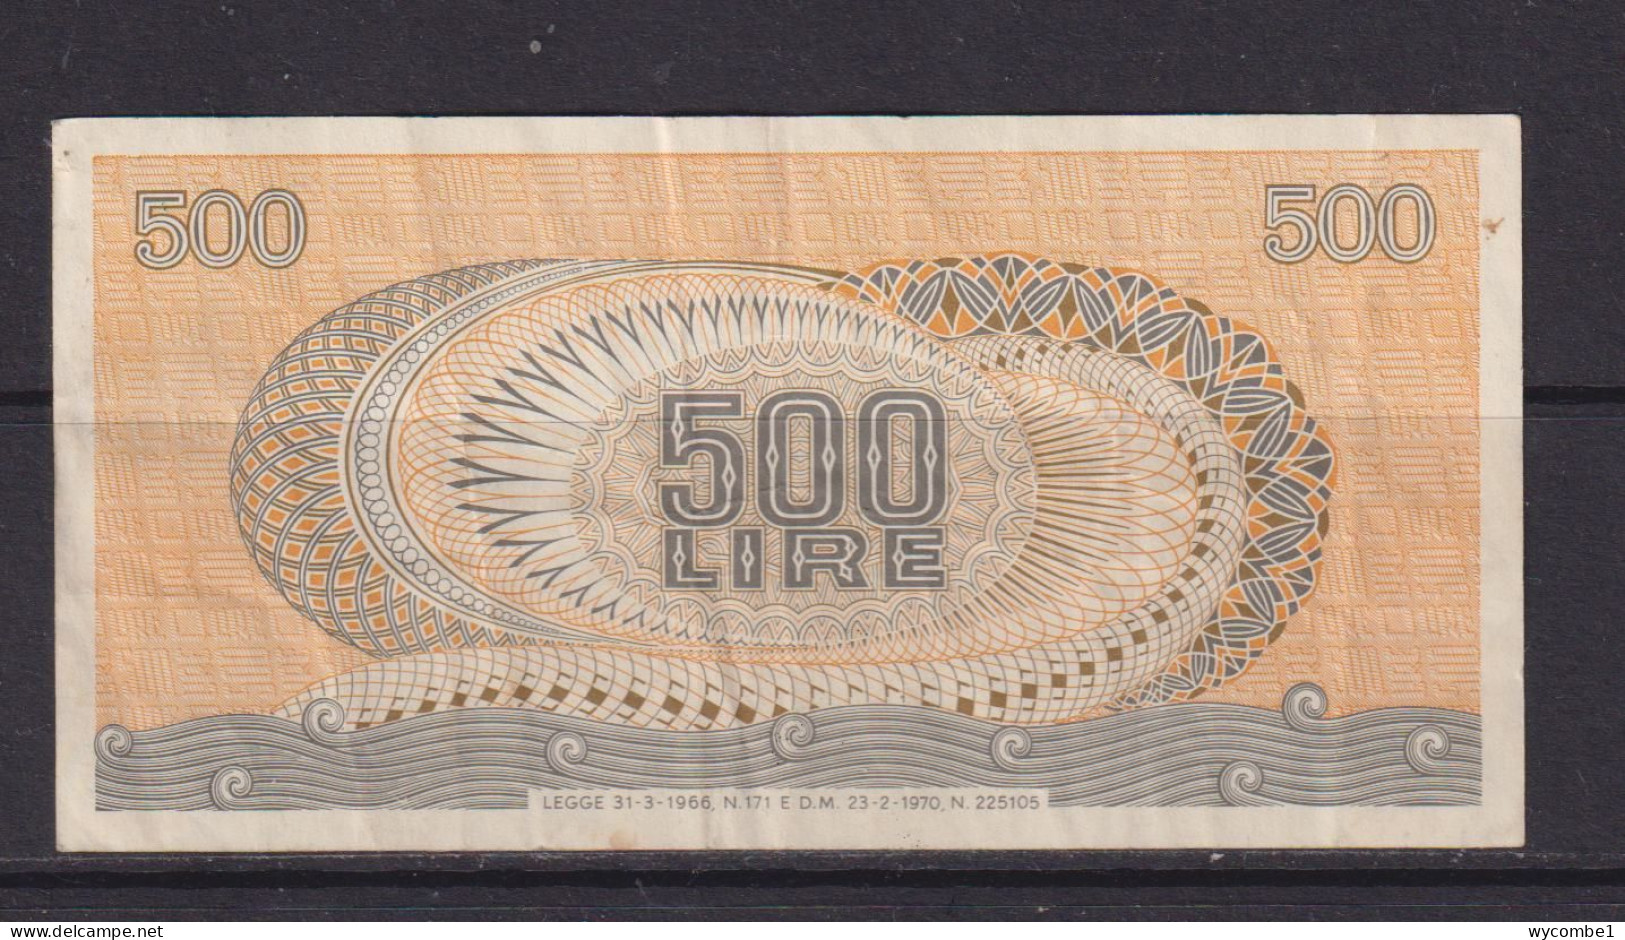 ITALY - 1967 500 Lira Circulated Banknote - 500 Lire